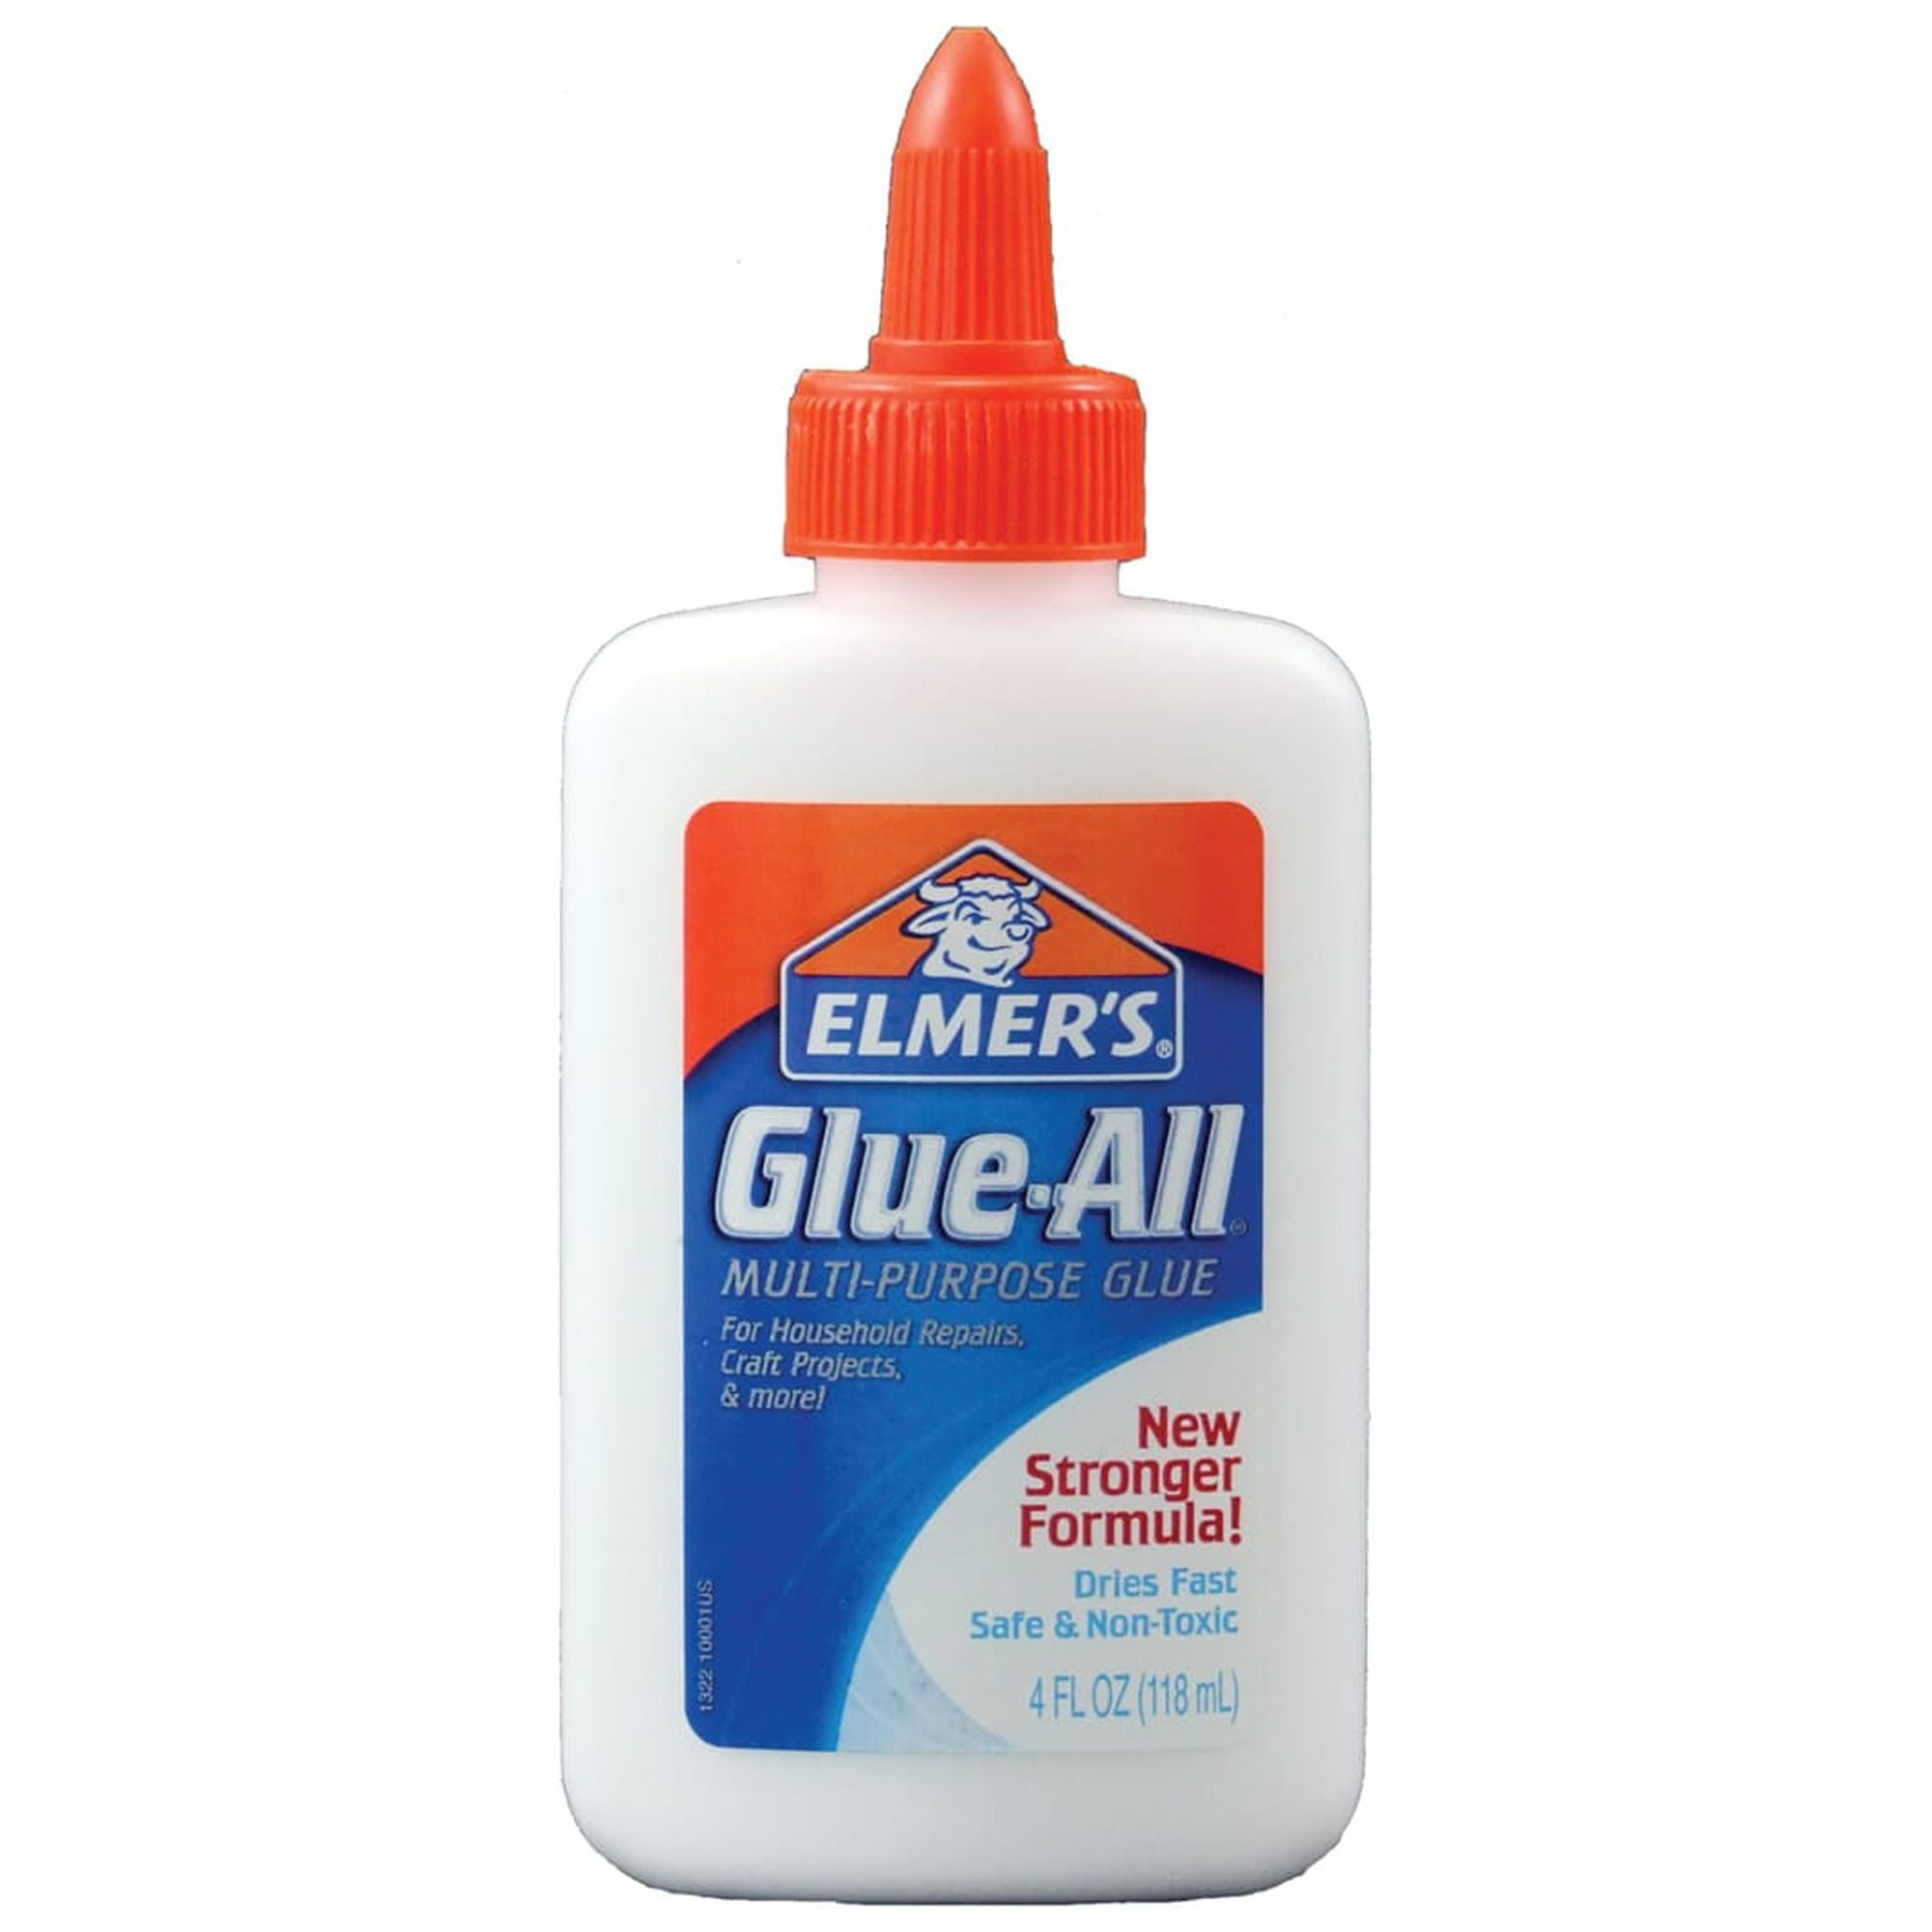 Elmer's Glue-All Bulldozer - Media Collections Online